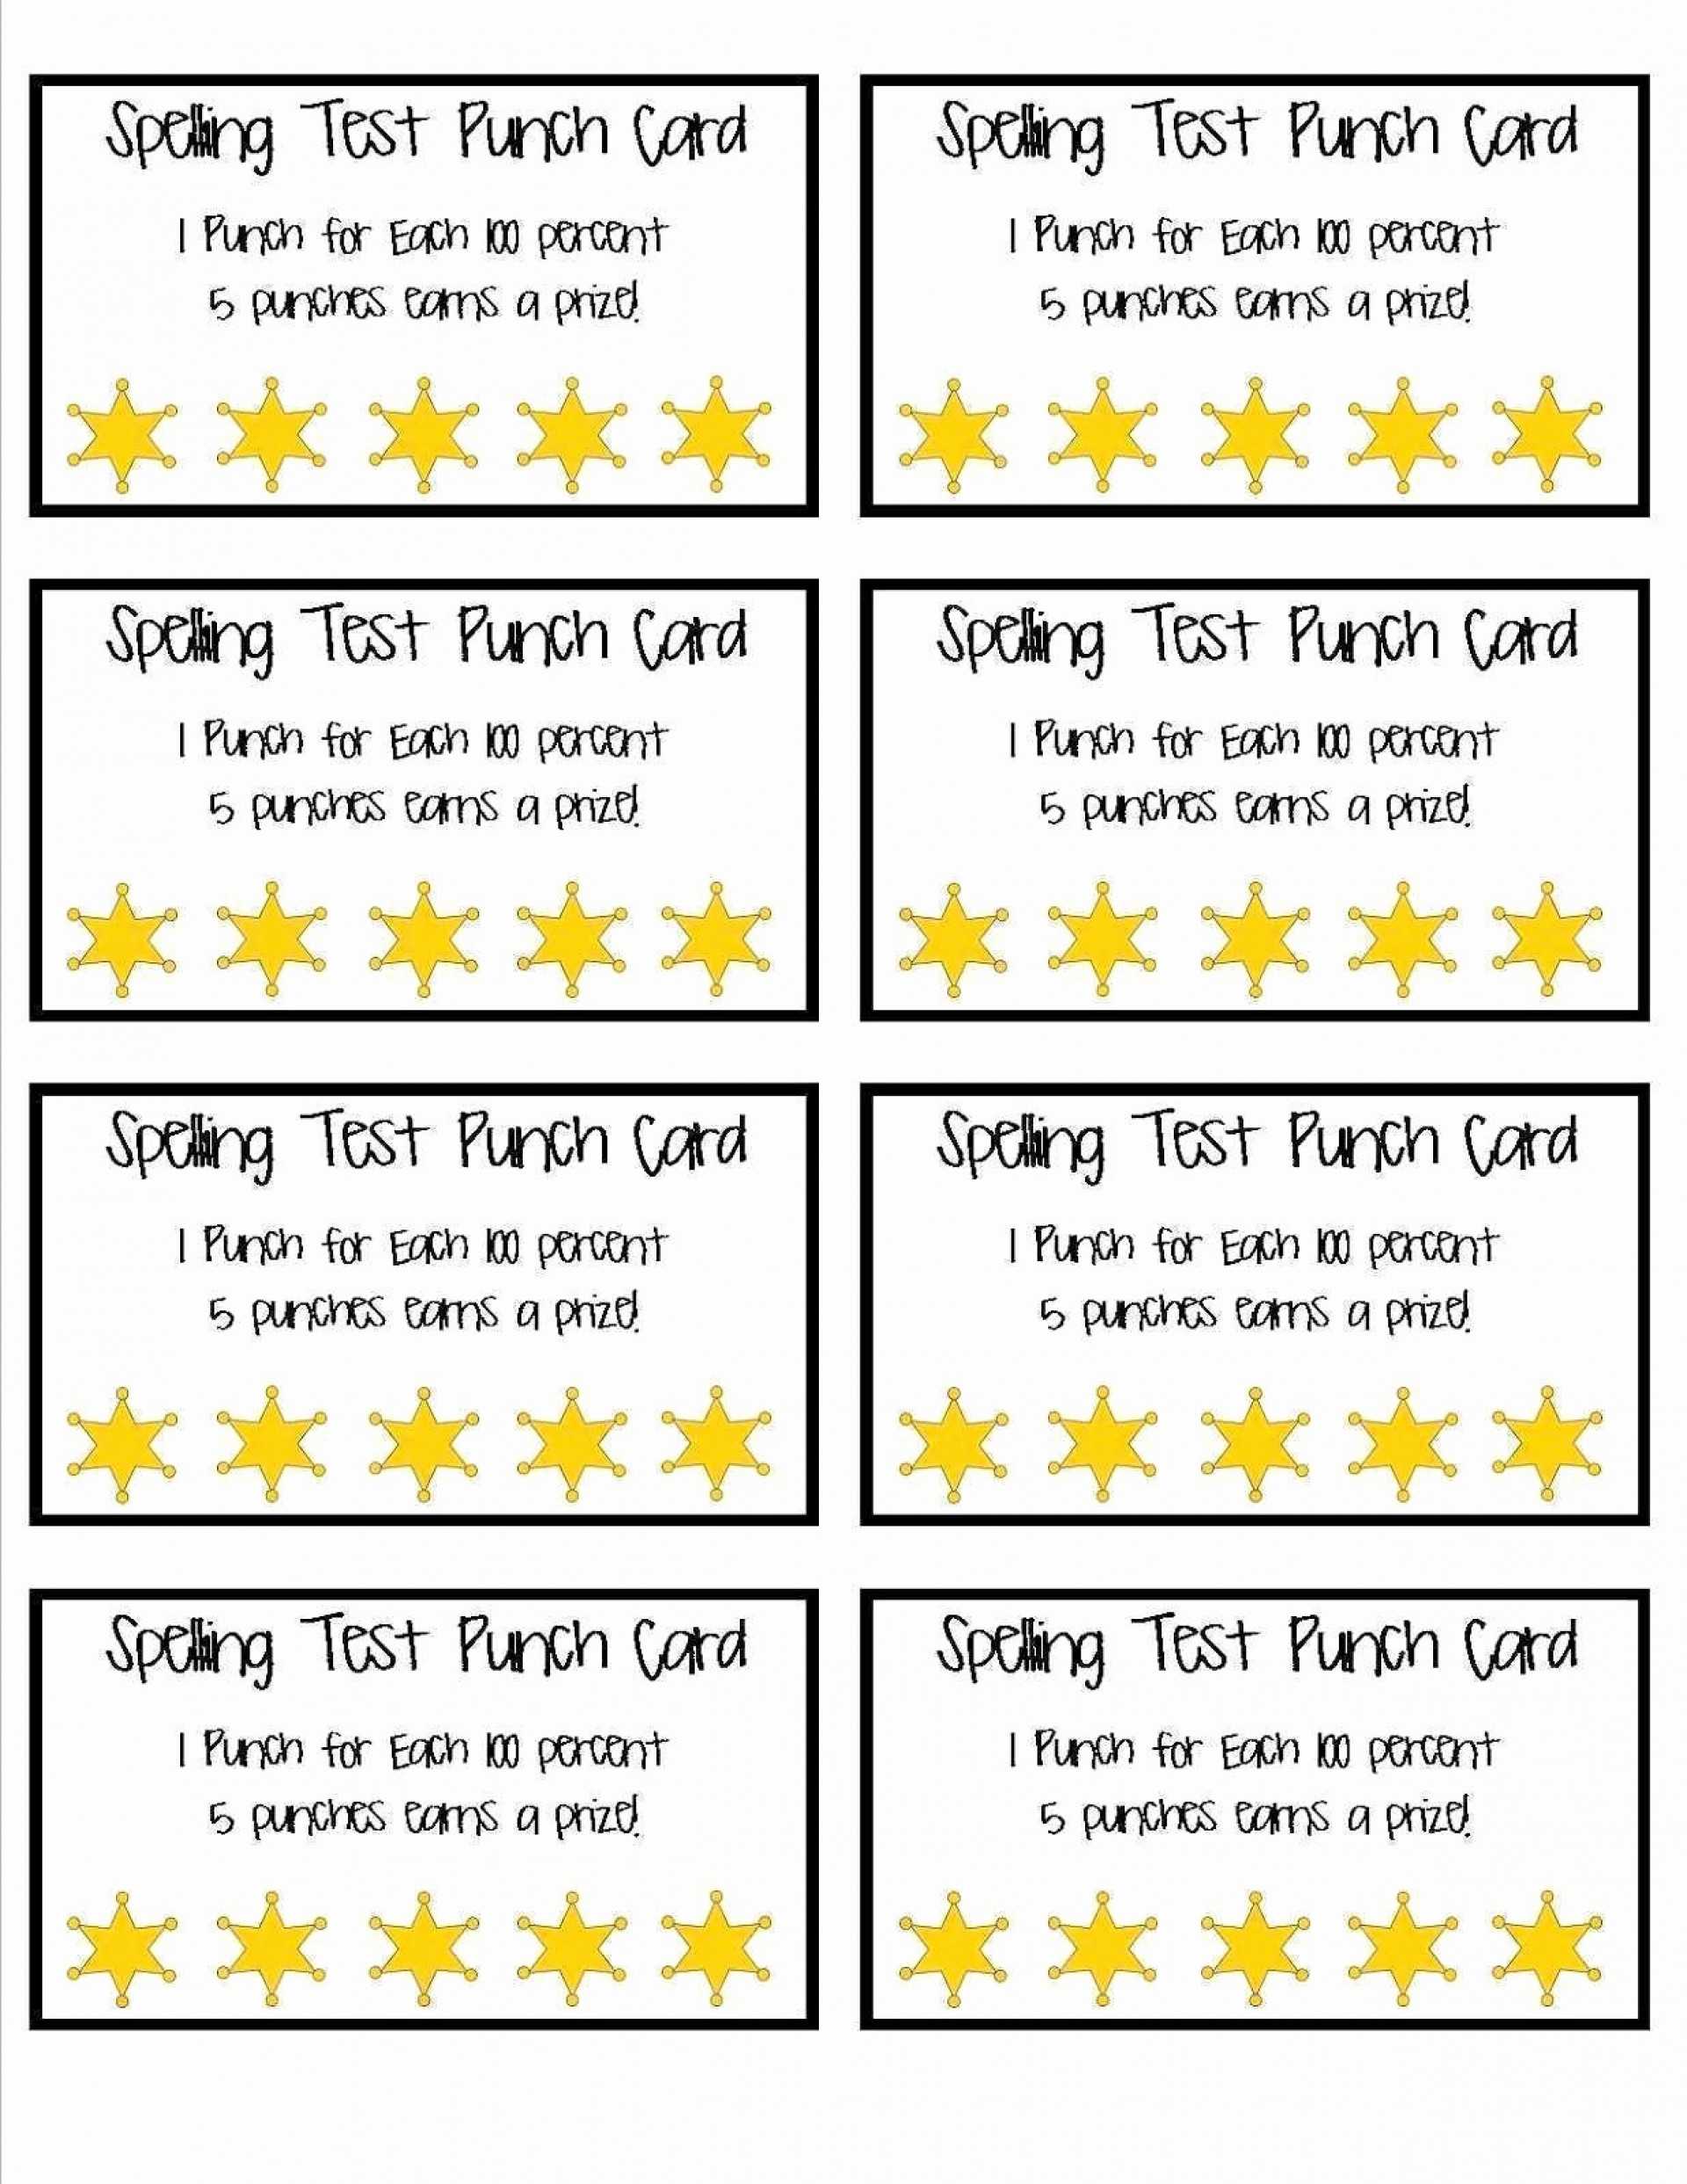 023 Template Ideas Behavior Punch Cards Pinterest Card Intended For Business Punch Card Template Free